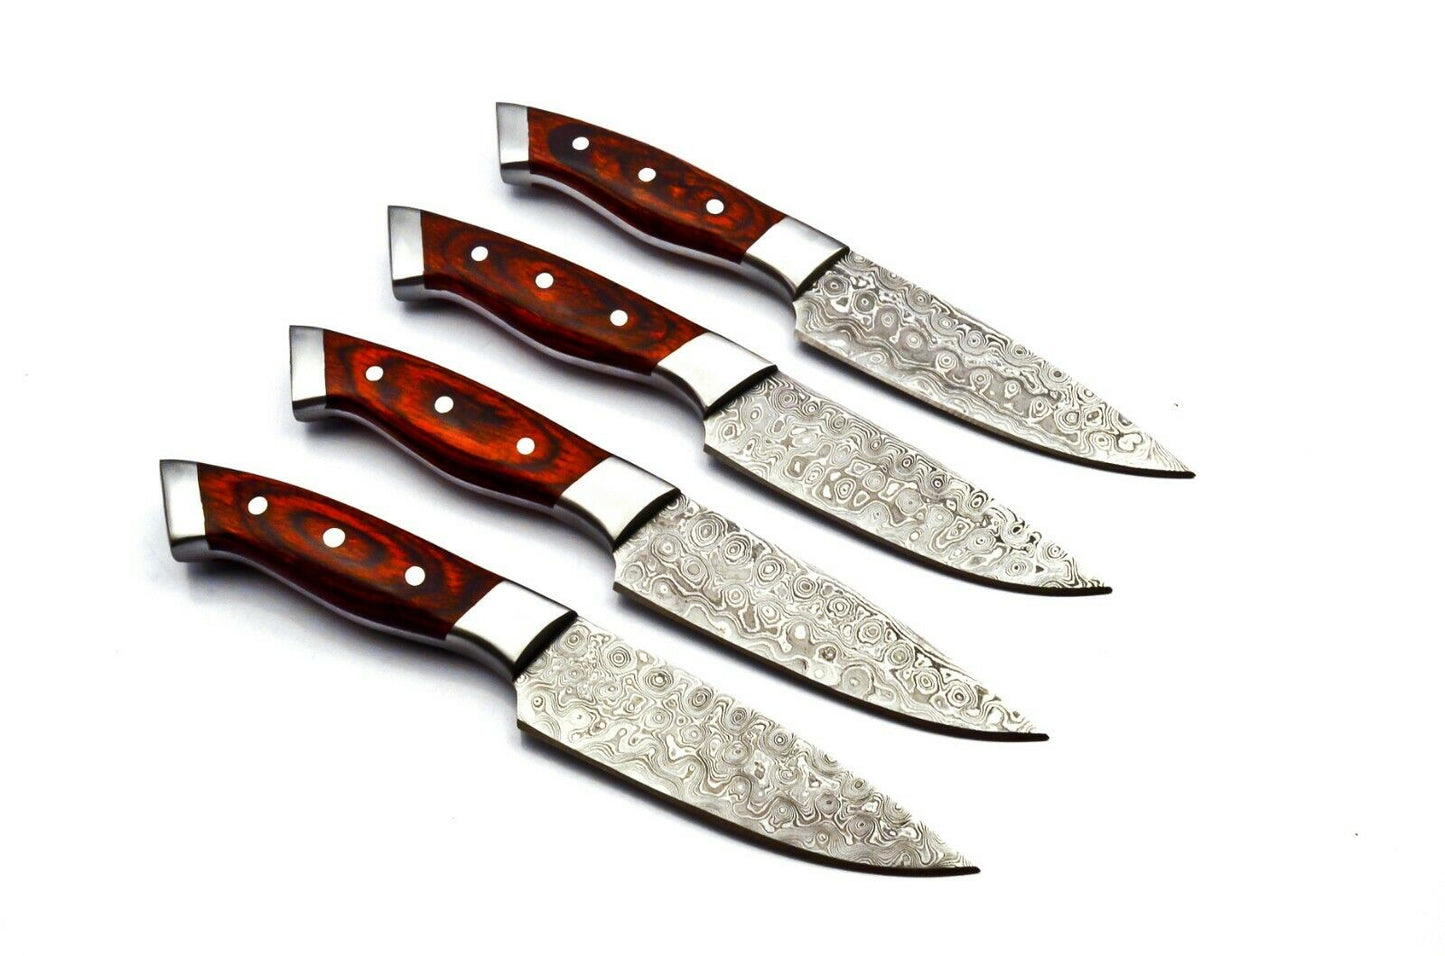 Handmade 4 Pcs Steak Knife Set Damascus Steel Kitchen Knife Set With Leather Bag